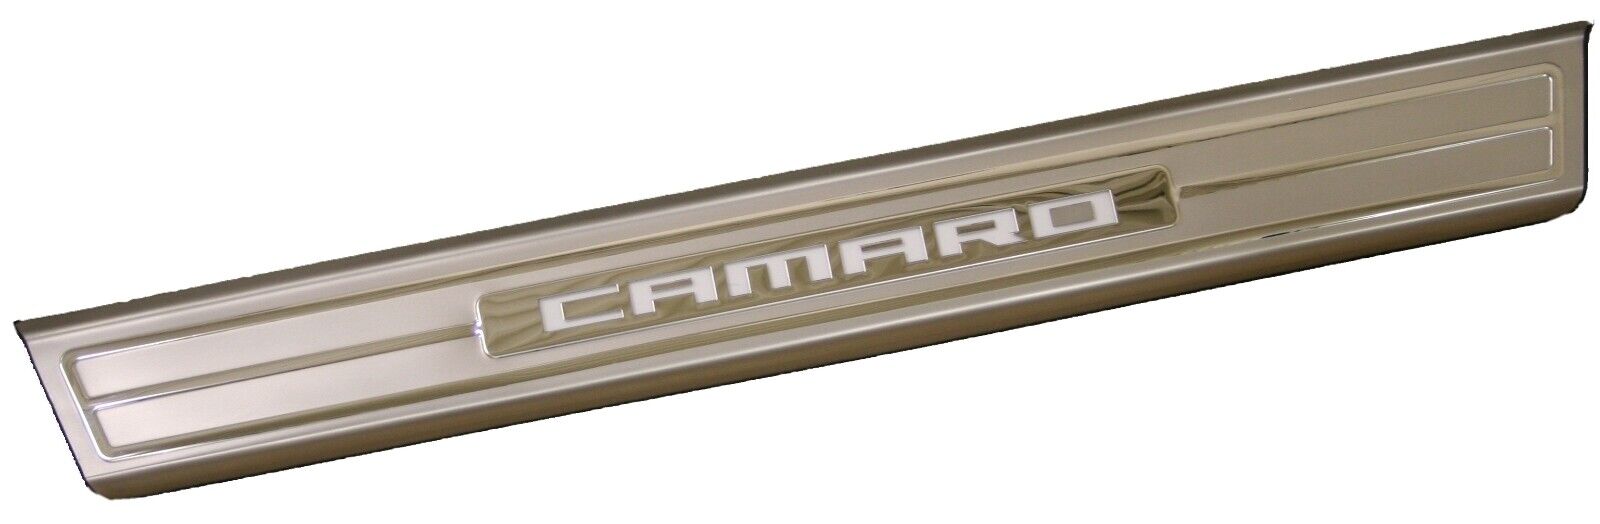 2010-15 Camaro Illuminated aluminum self-adhesive door sill plates(Sold As Pair)